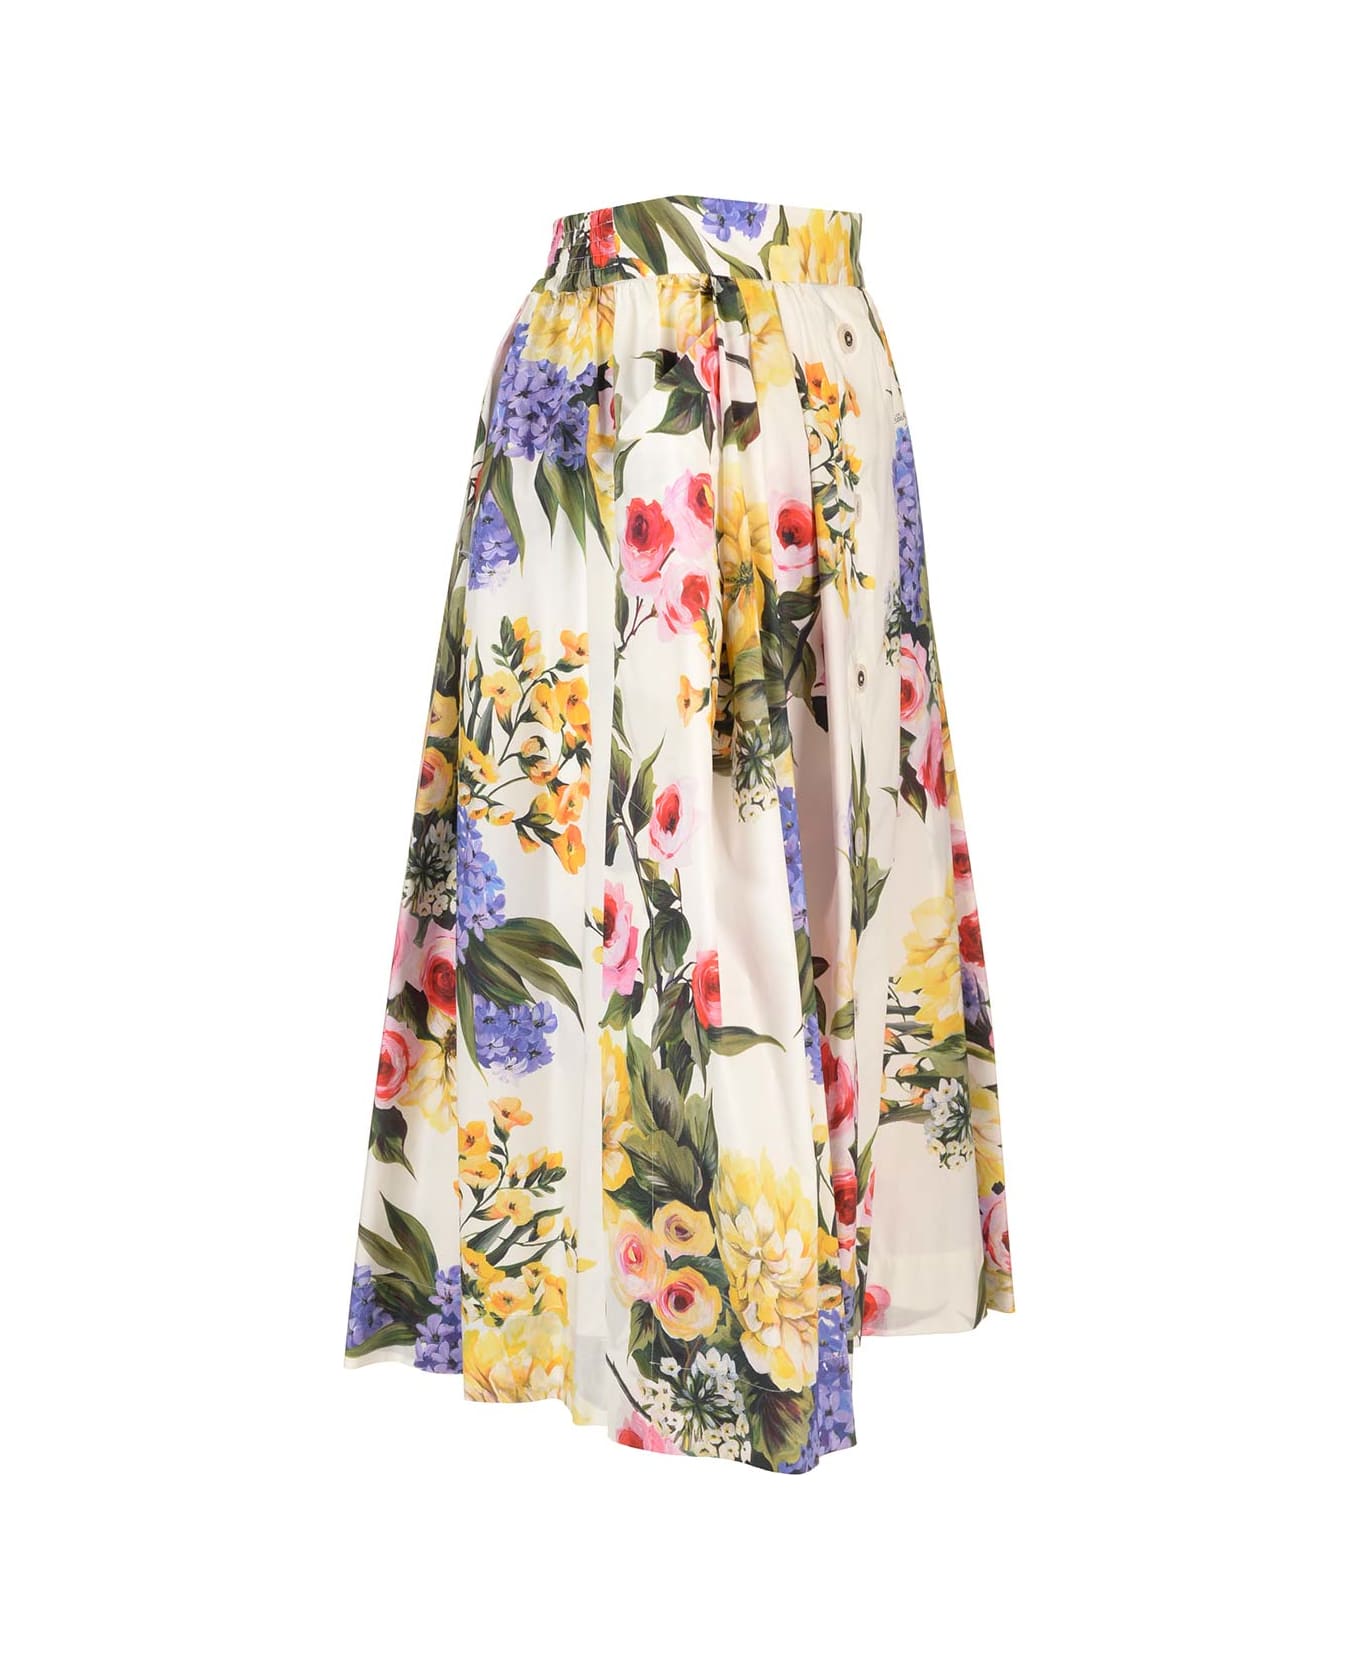 Dolce & Gabbana Floral Print Skirt - Multicolor